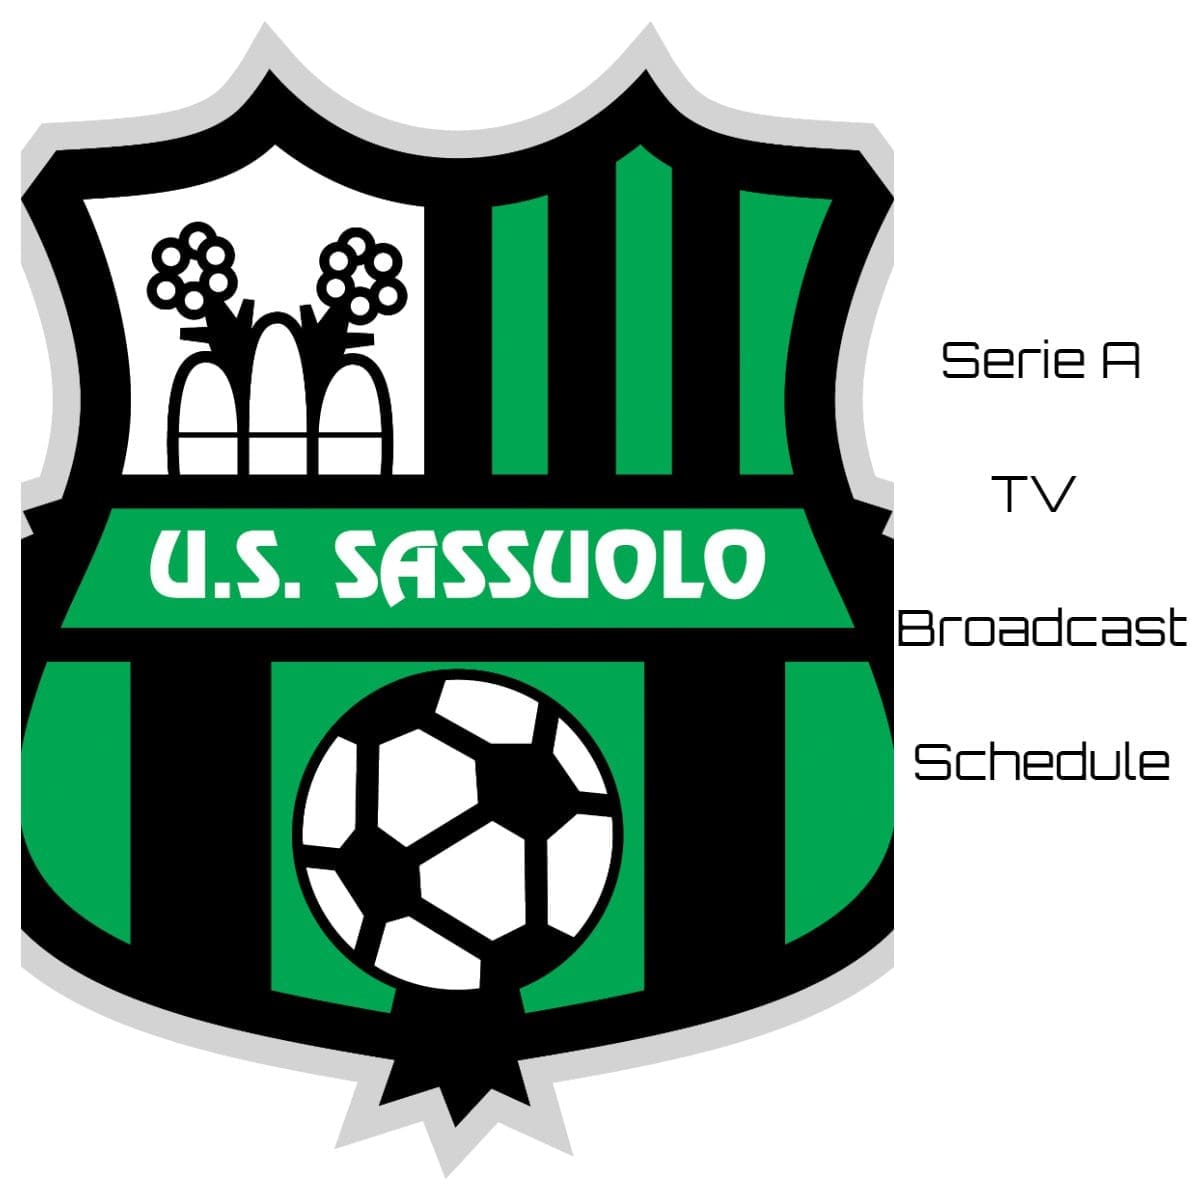 Sassuolo TV Broadcast Schedule